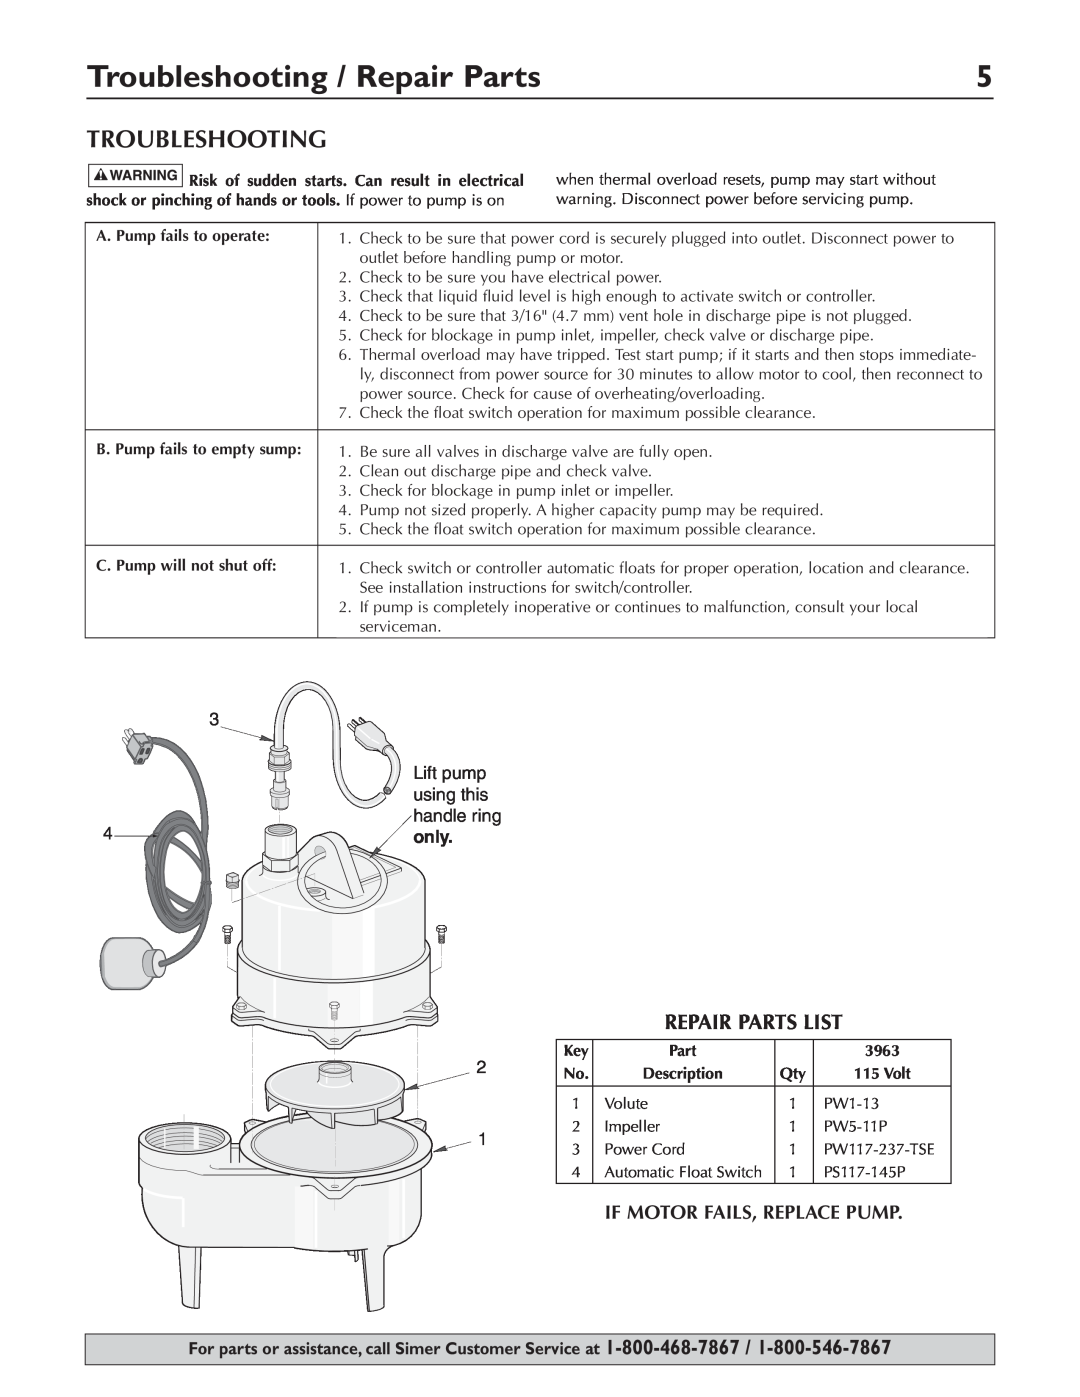 Simer Pumps 3963 owner manual Troubleshooting / Repair Parts, Repair Parts List, If Motor Fails, Replace Pump 